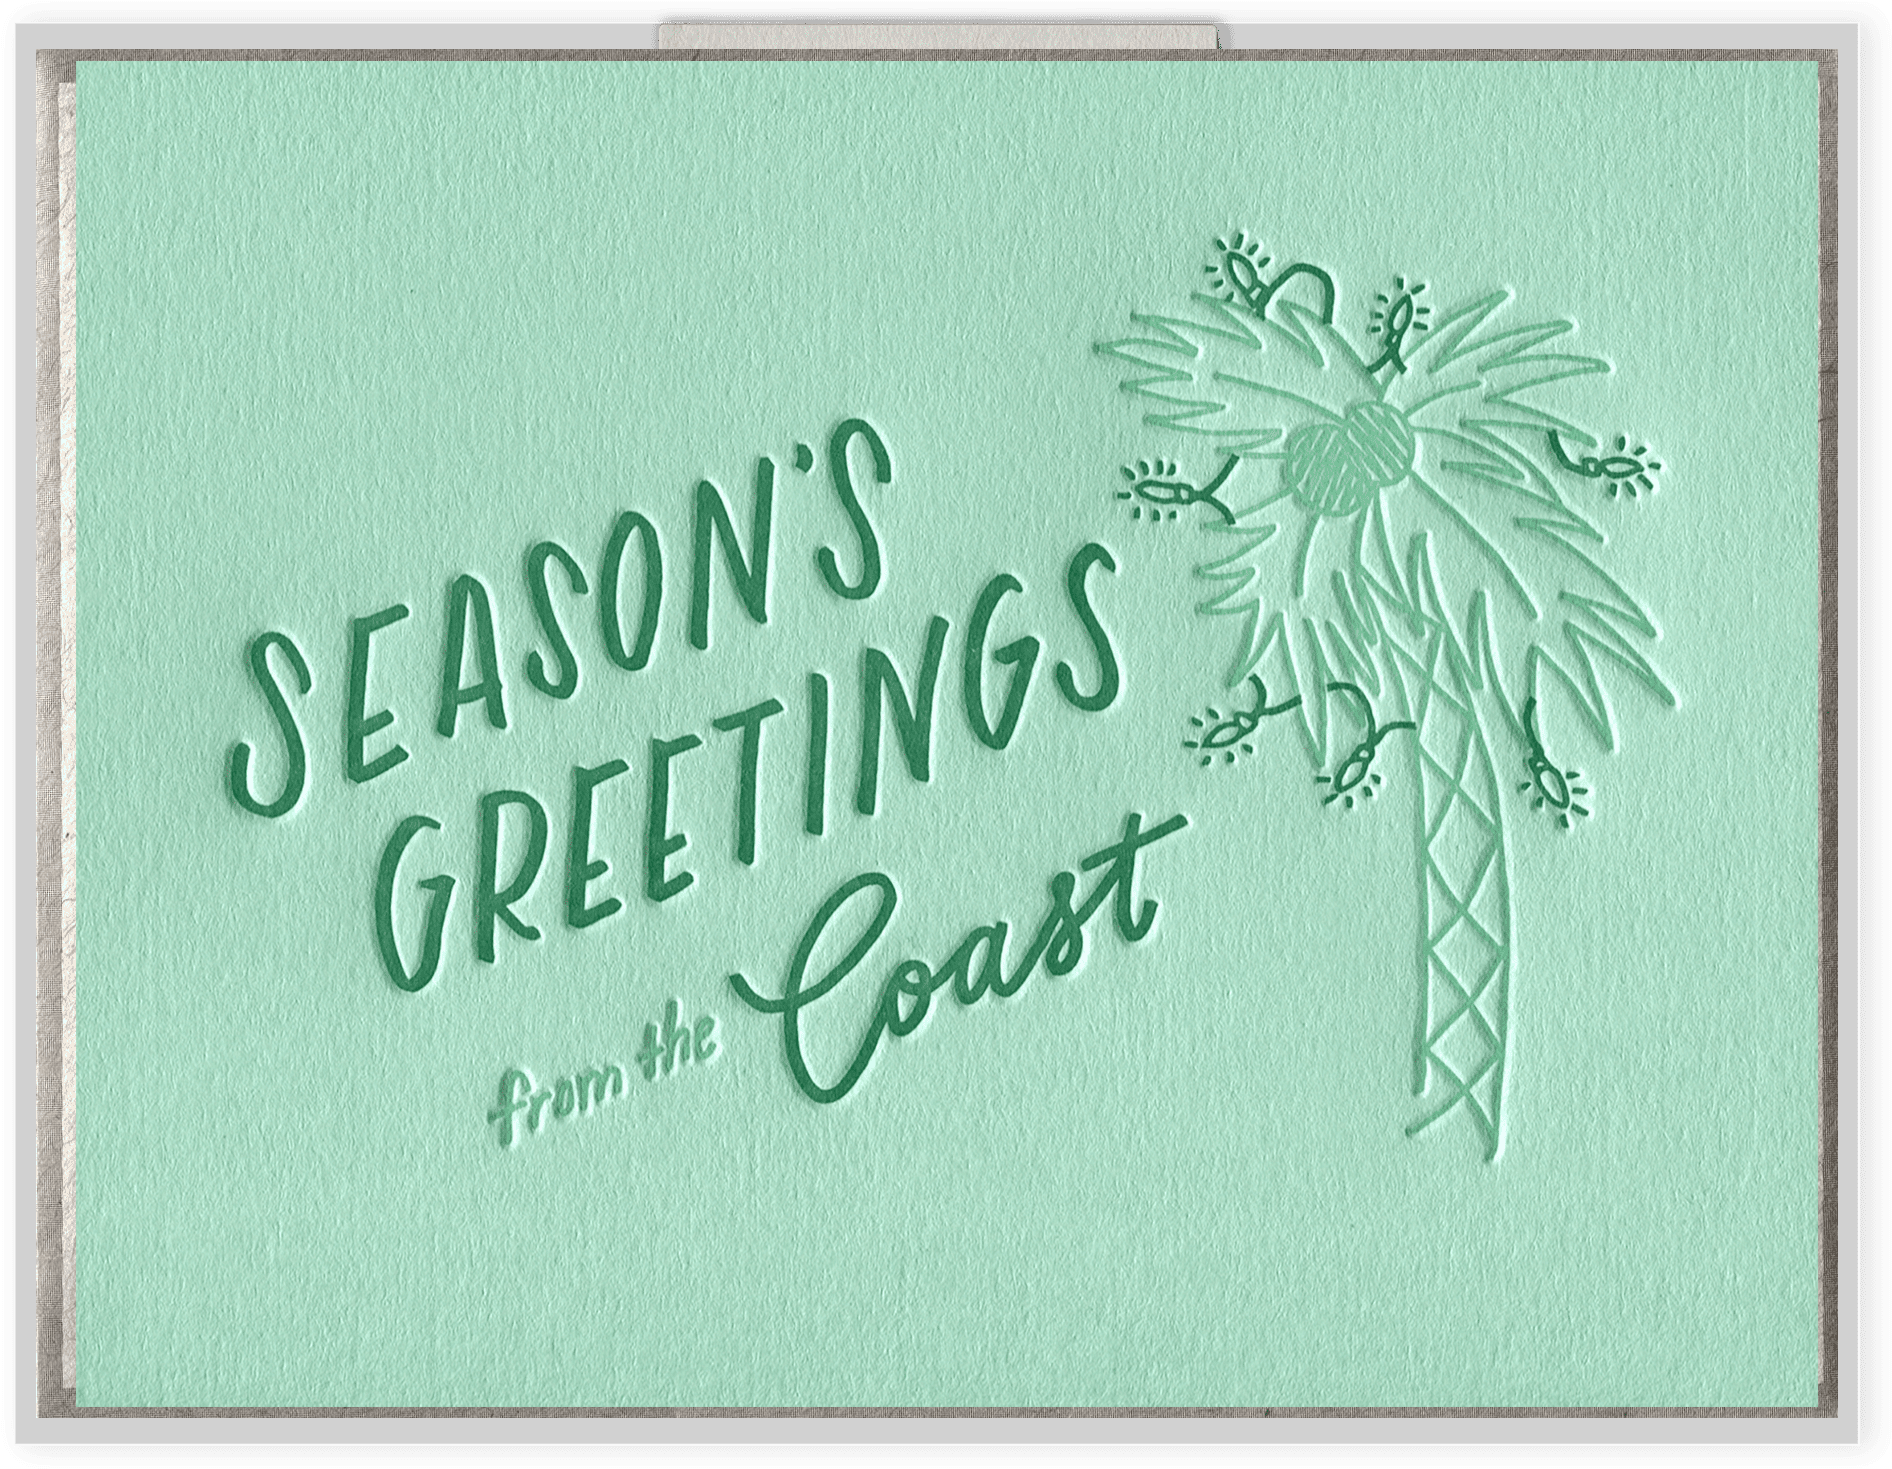 Coastal Seasons Greetings Card PNG